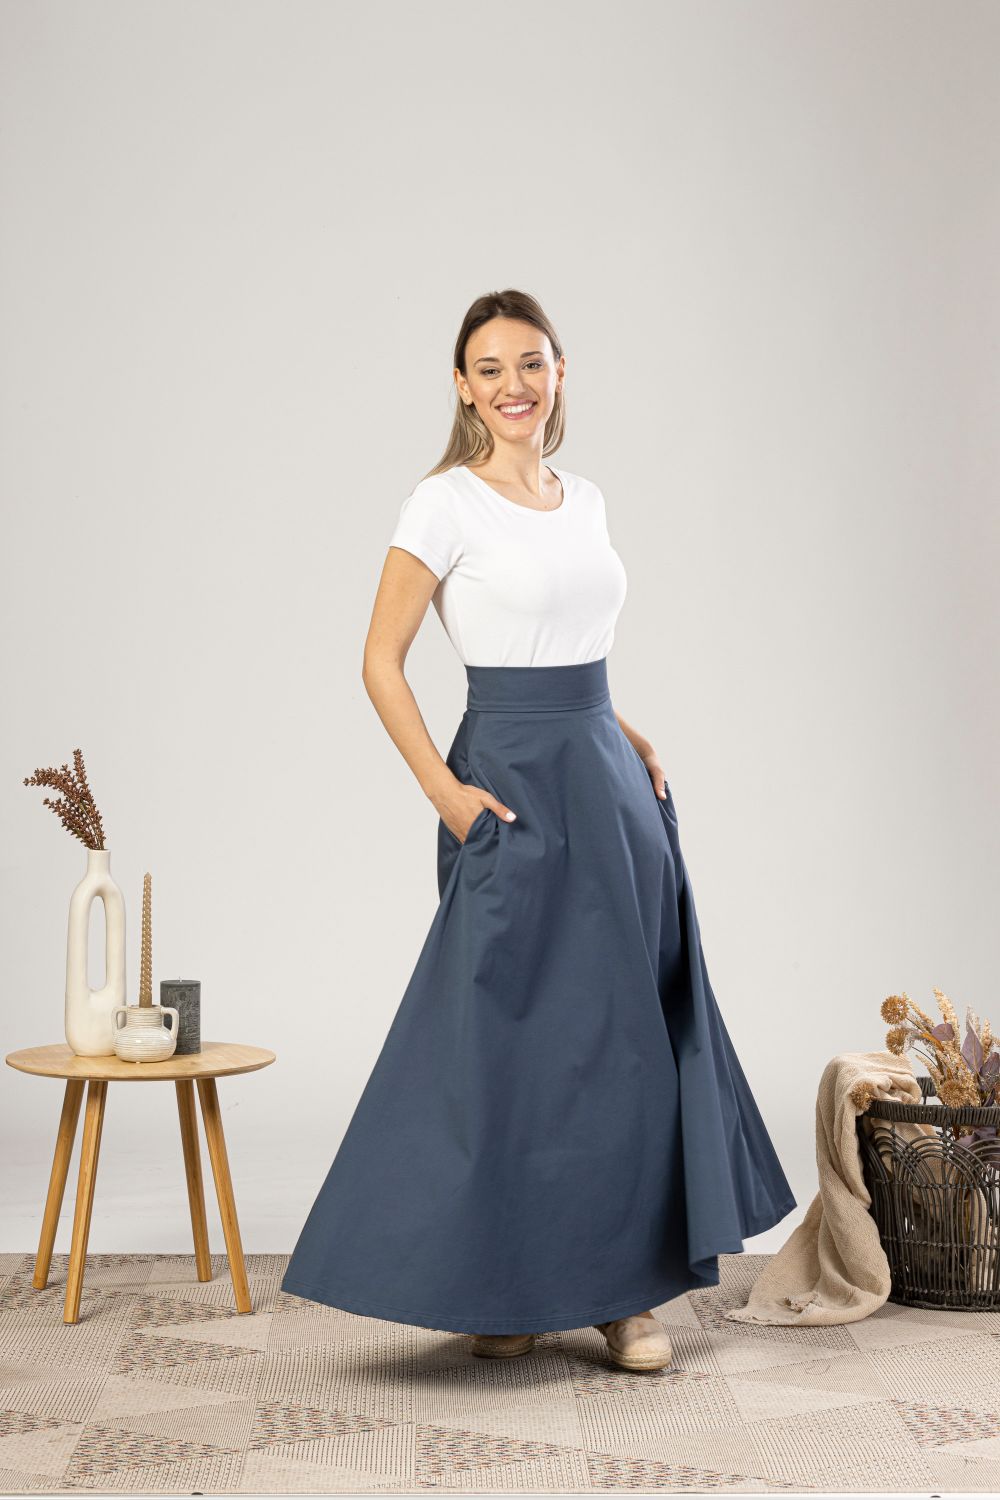 Gentle Bell-Shaped Summer Skirt for summer days - from NikkaPlace | Effortless fashion for easy living